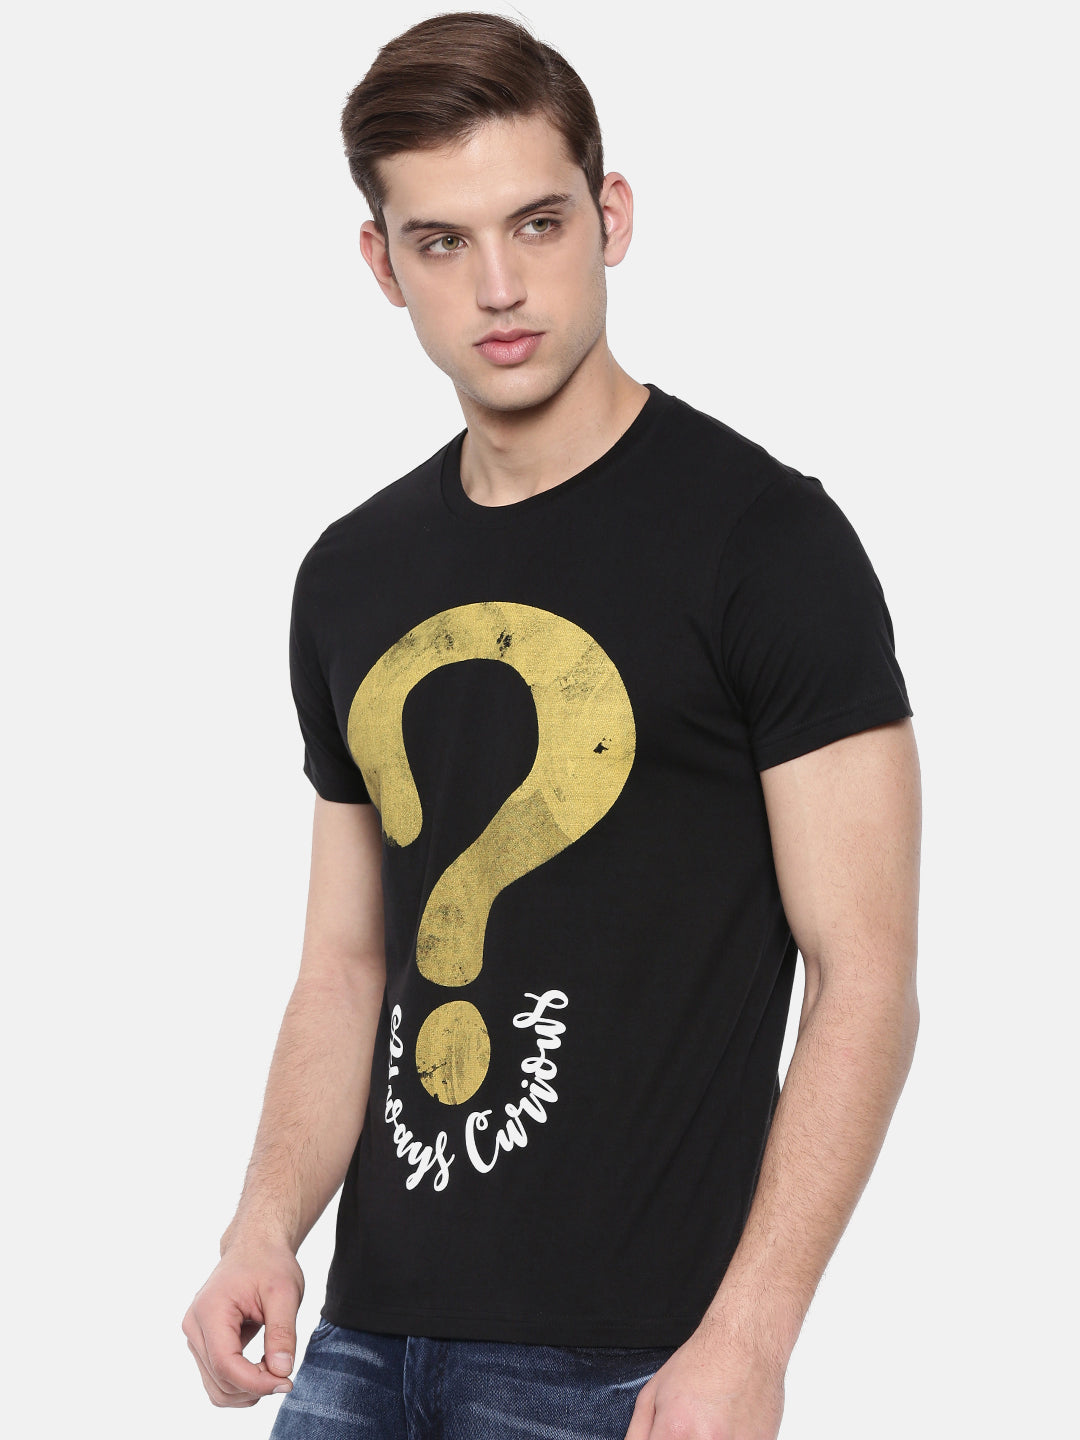 Always Curious T-Shirt Graphic T-Shirts Bushirt   